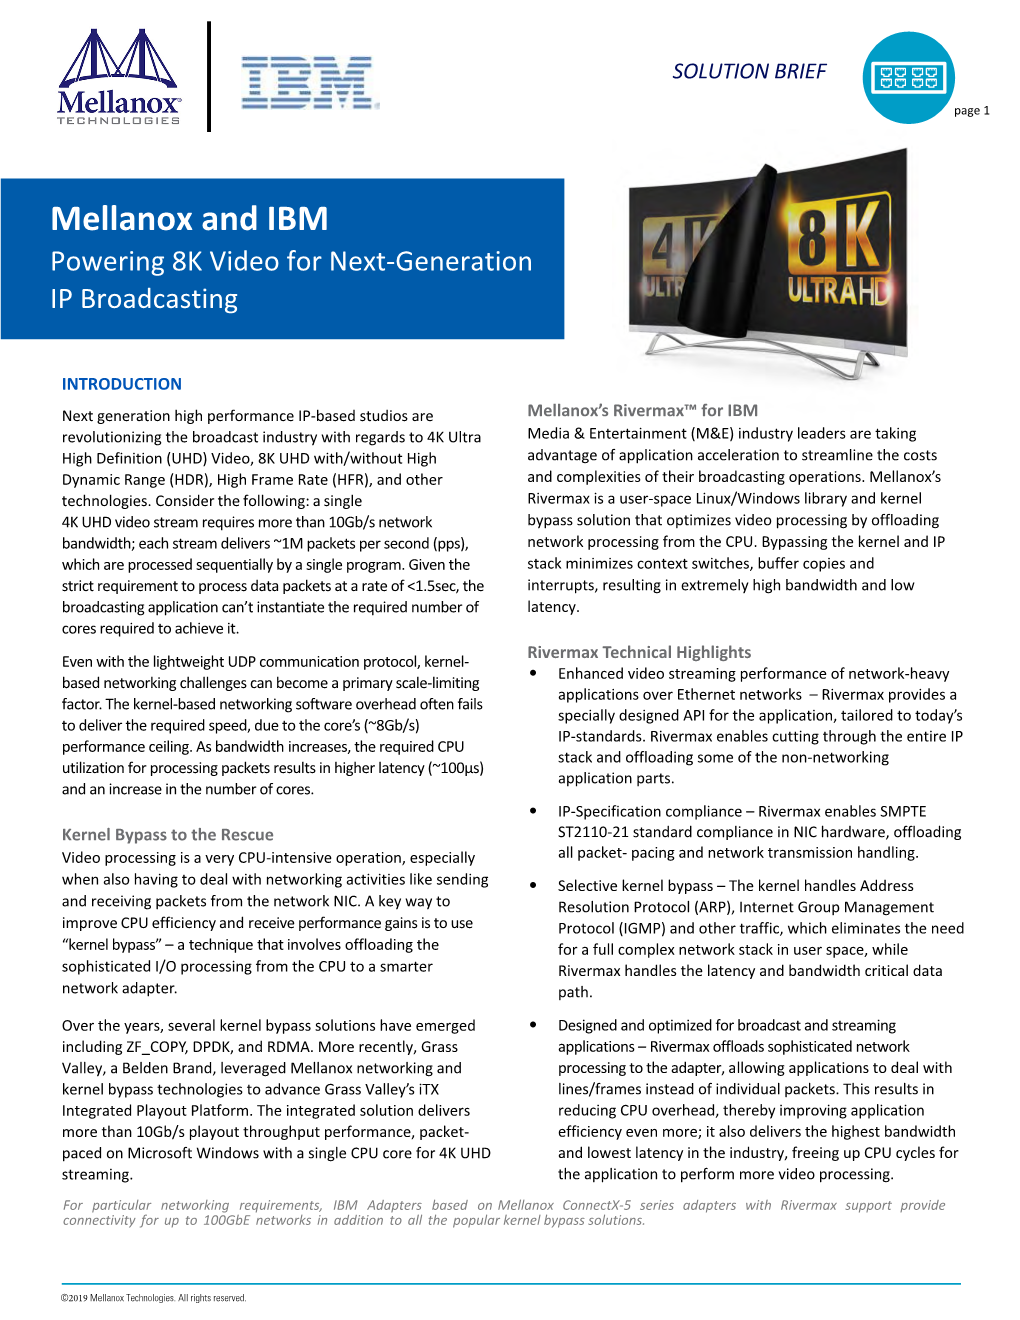 Mellanox and IBM Powering 8K Video for Next-Generation IP Broadcasting